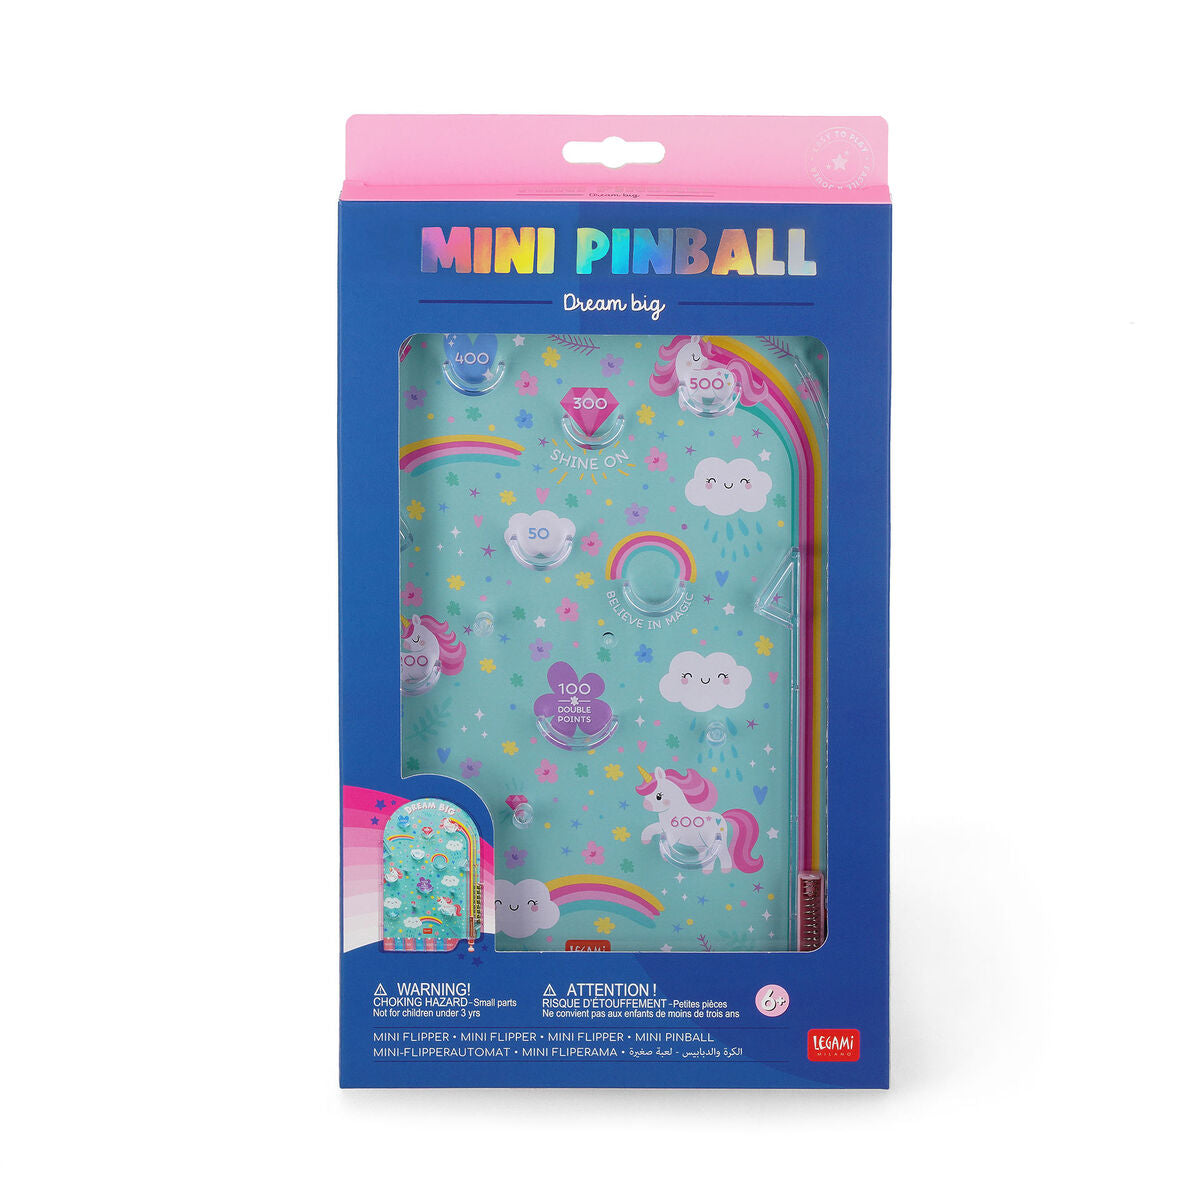 Mini Portable Pinball Game